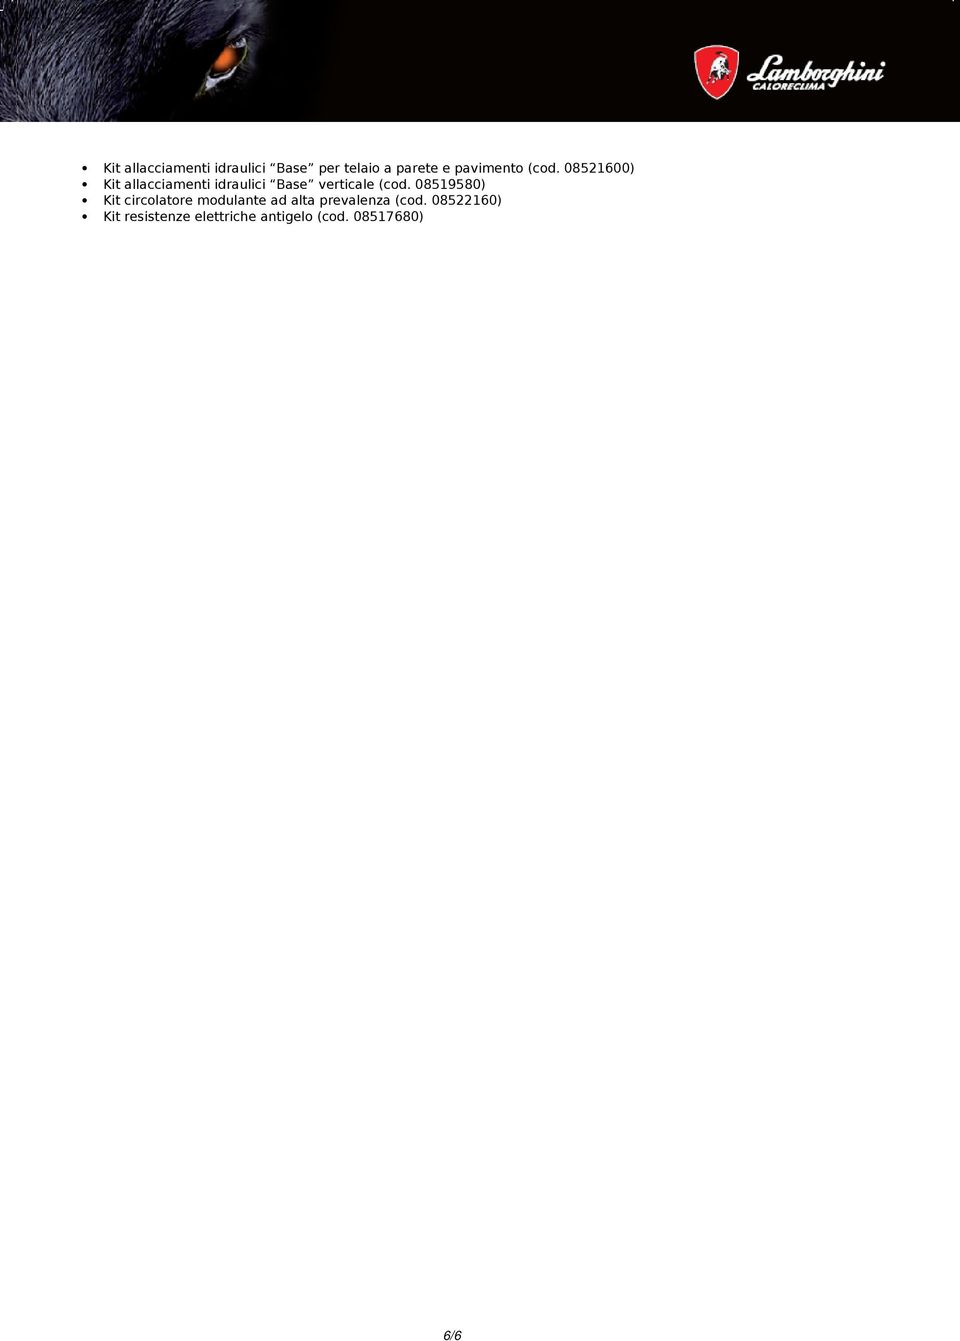 (cod. 08521600) Kit allacciamenti idraulici Base verticale (cod.